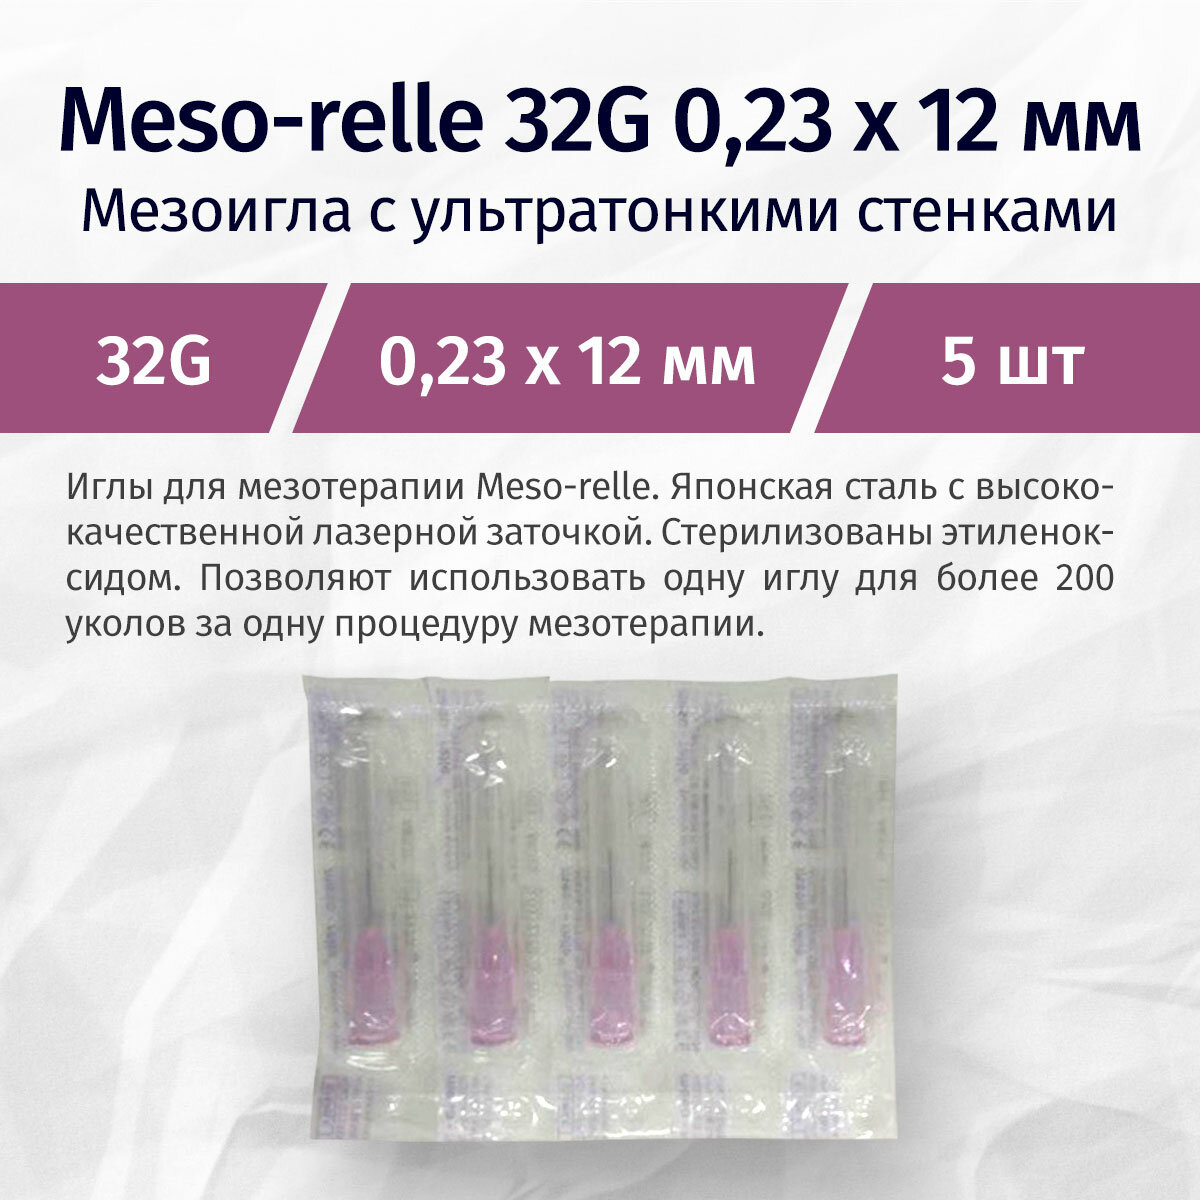 Иглы Meso-relle для мезотерапии 32G 0,23х12 мм 5 шт.